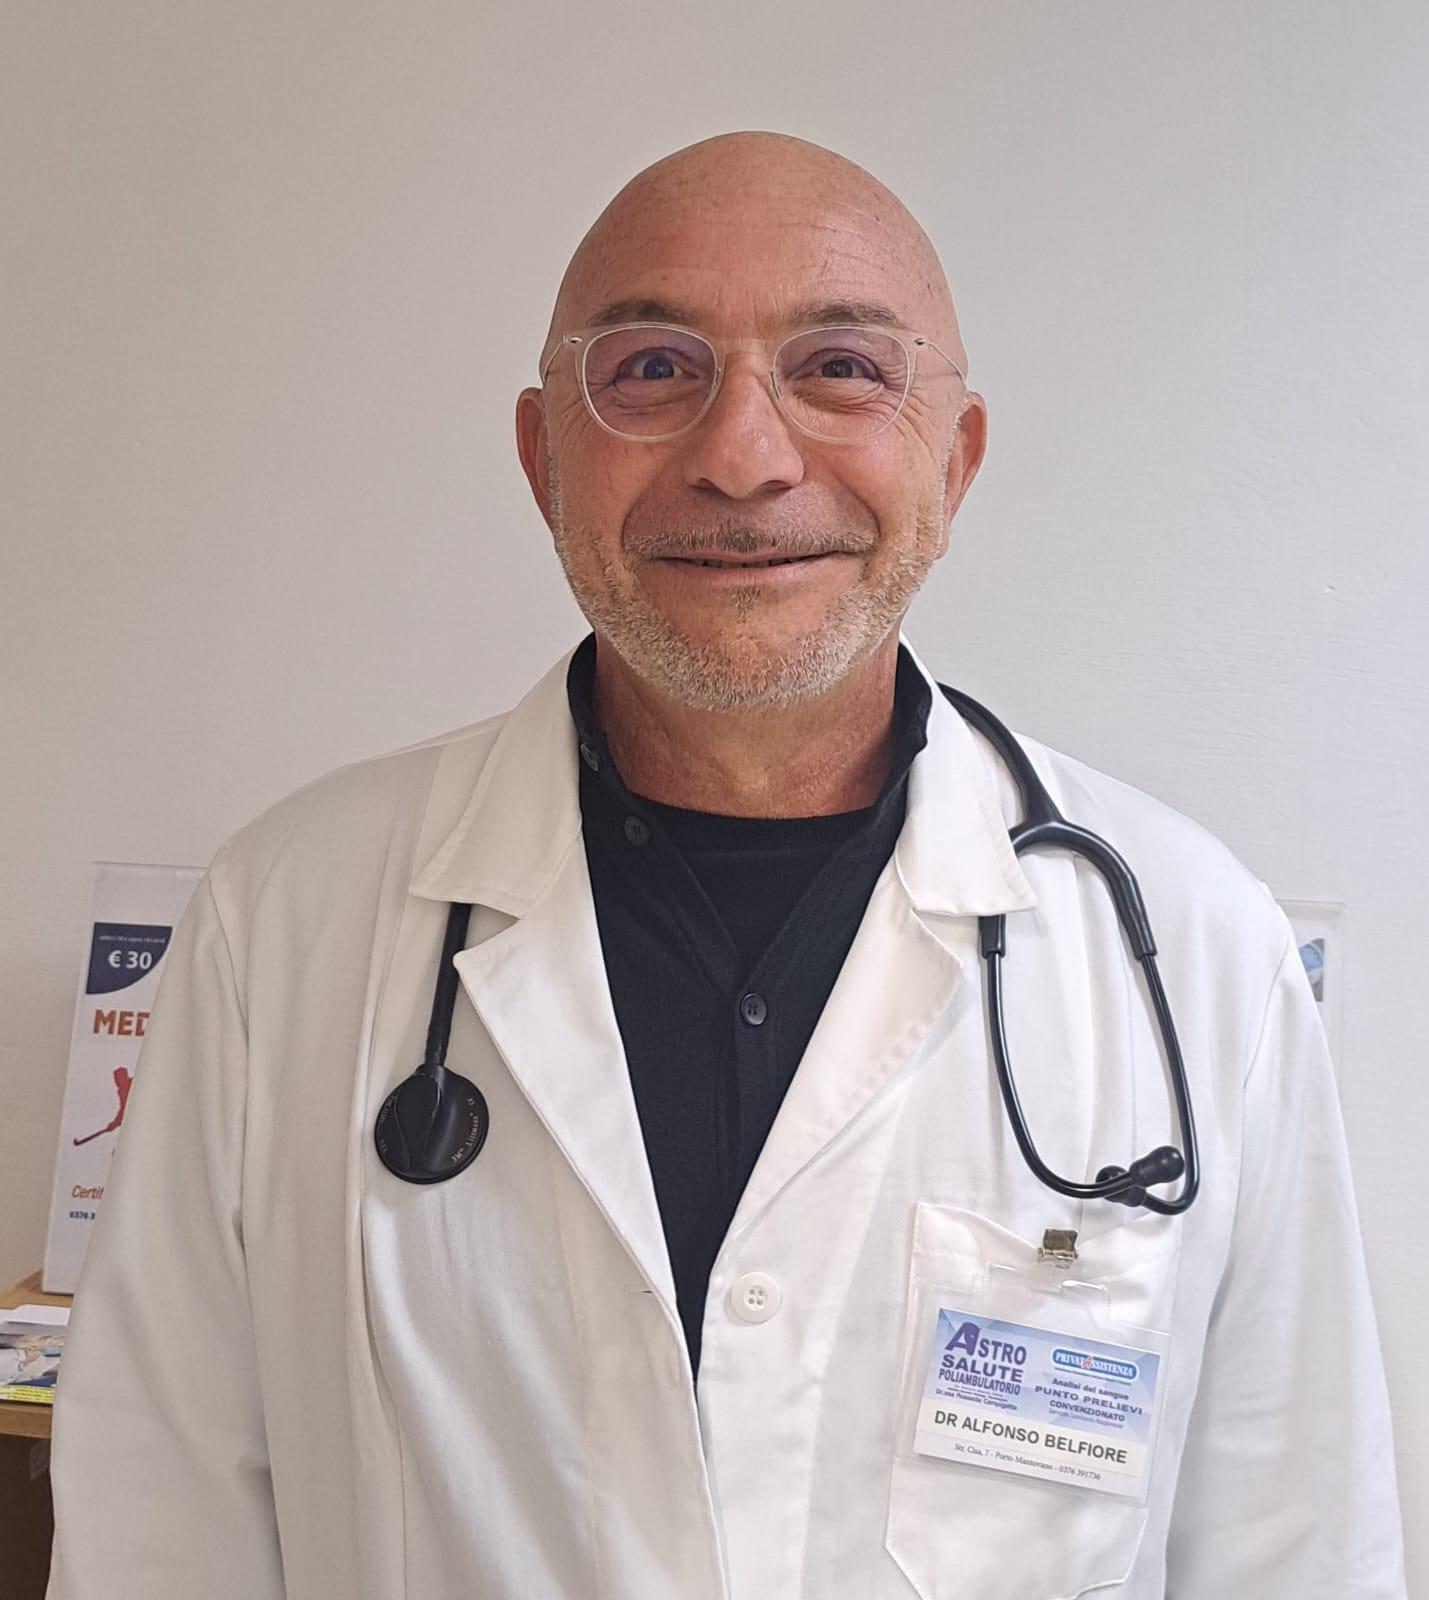 Dr. Alfonso Belfiore